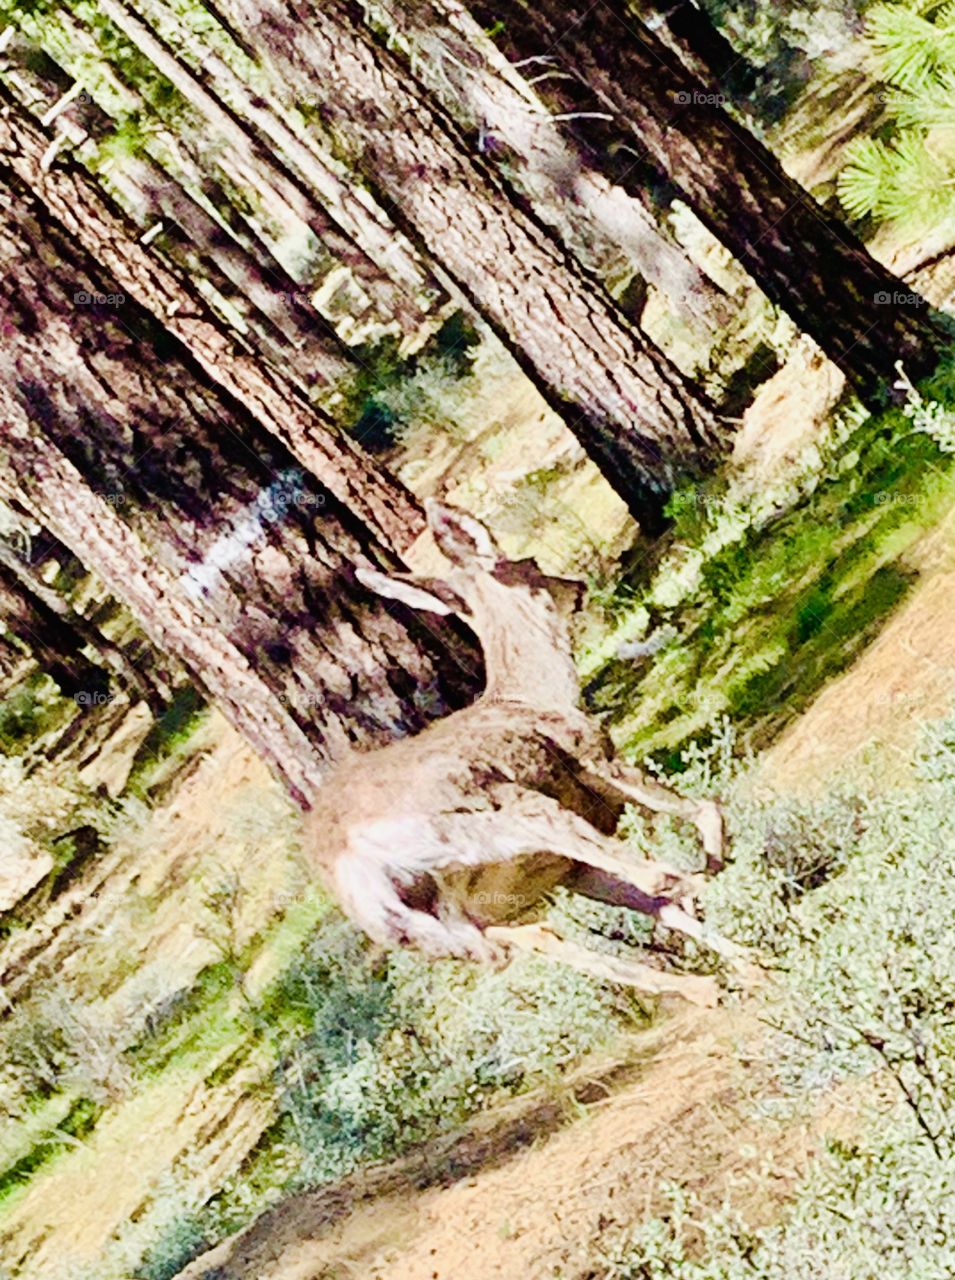 Running deer